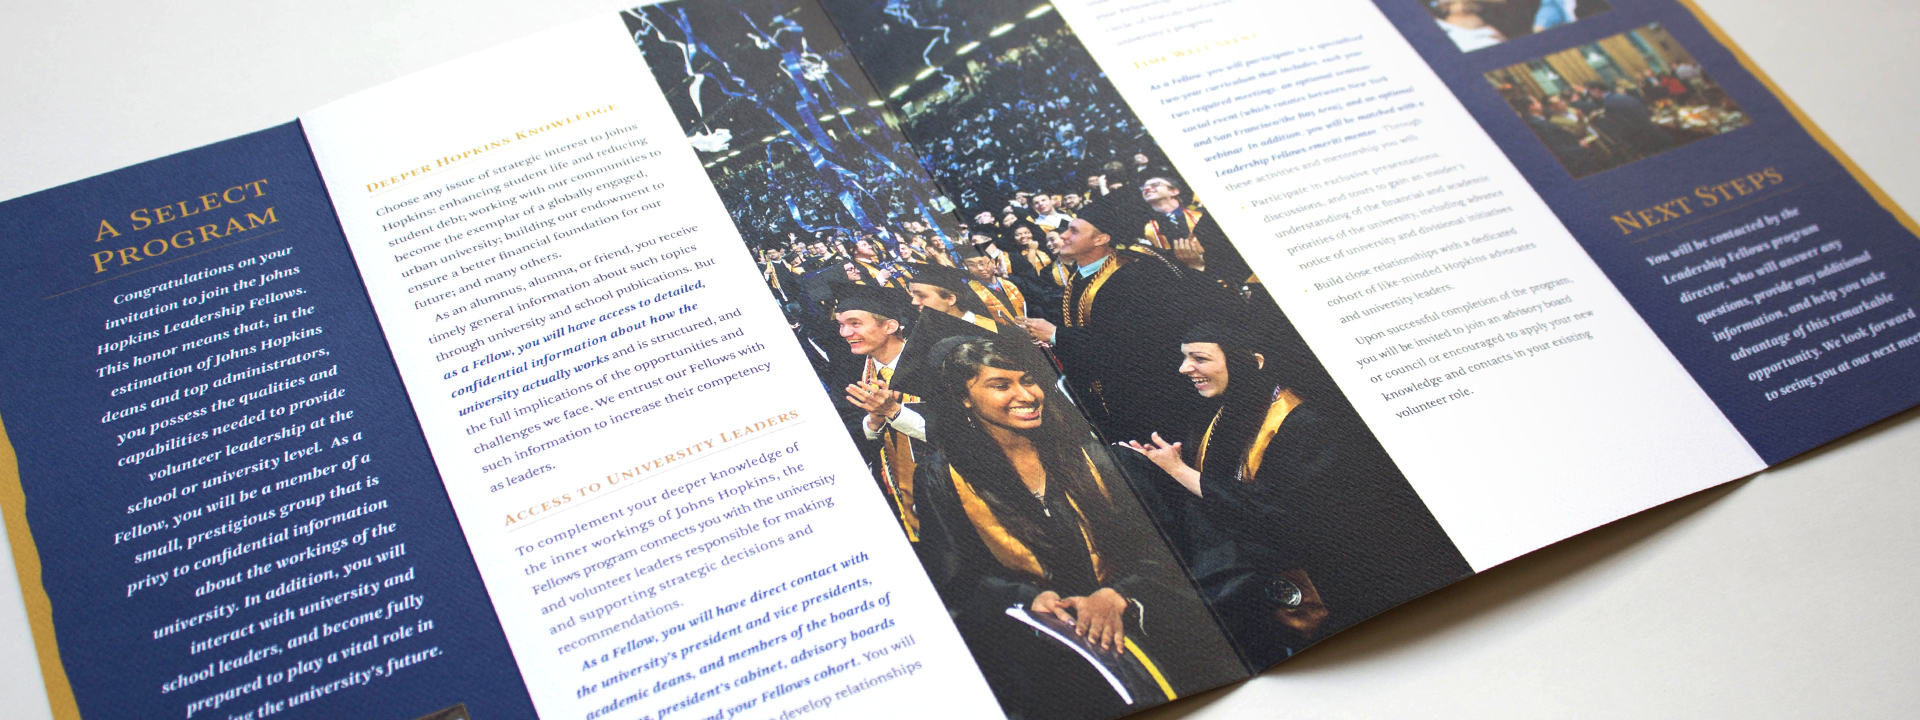 Johns Hopkins leadership program brochure unfolded